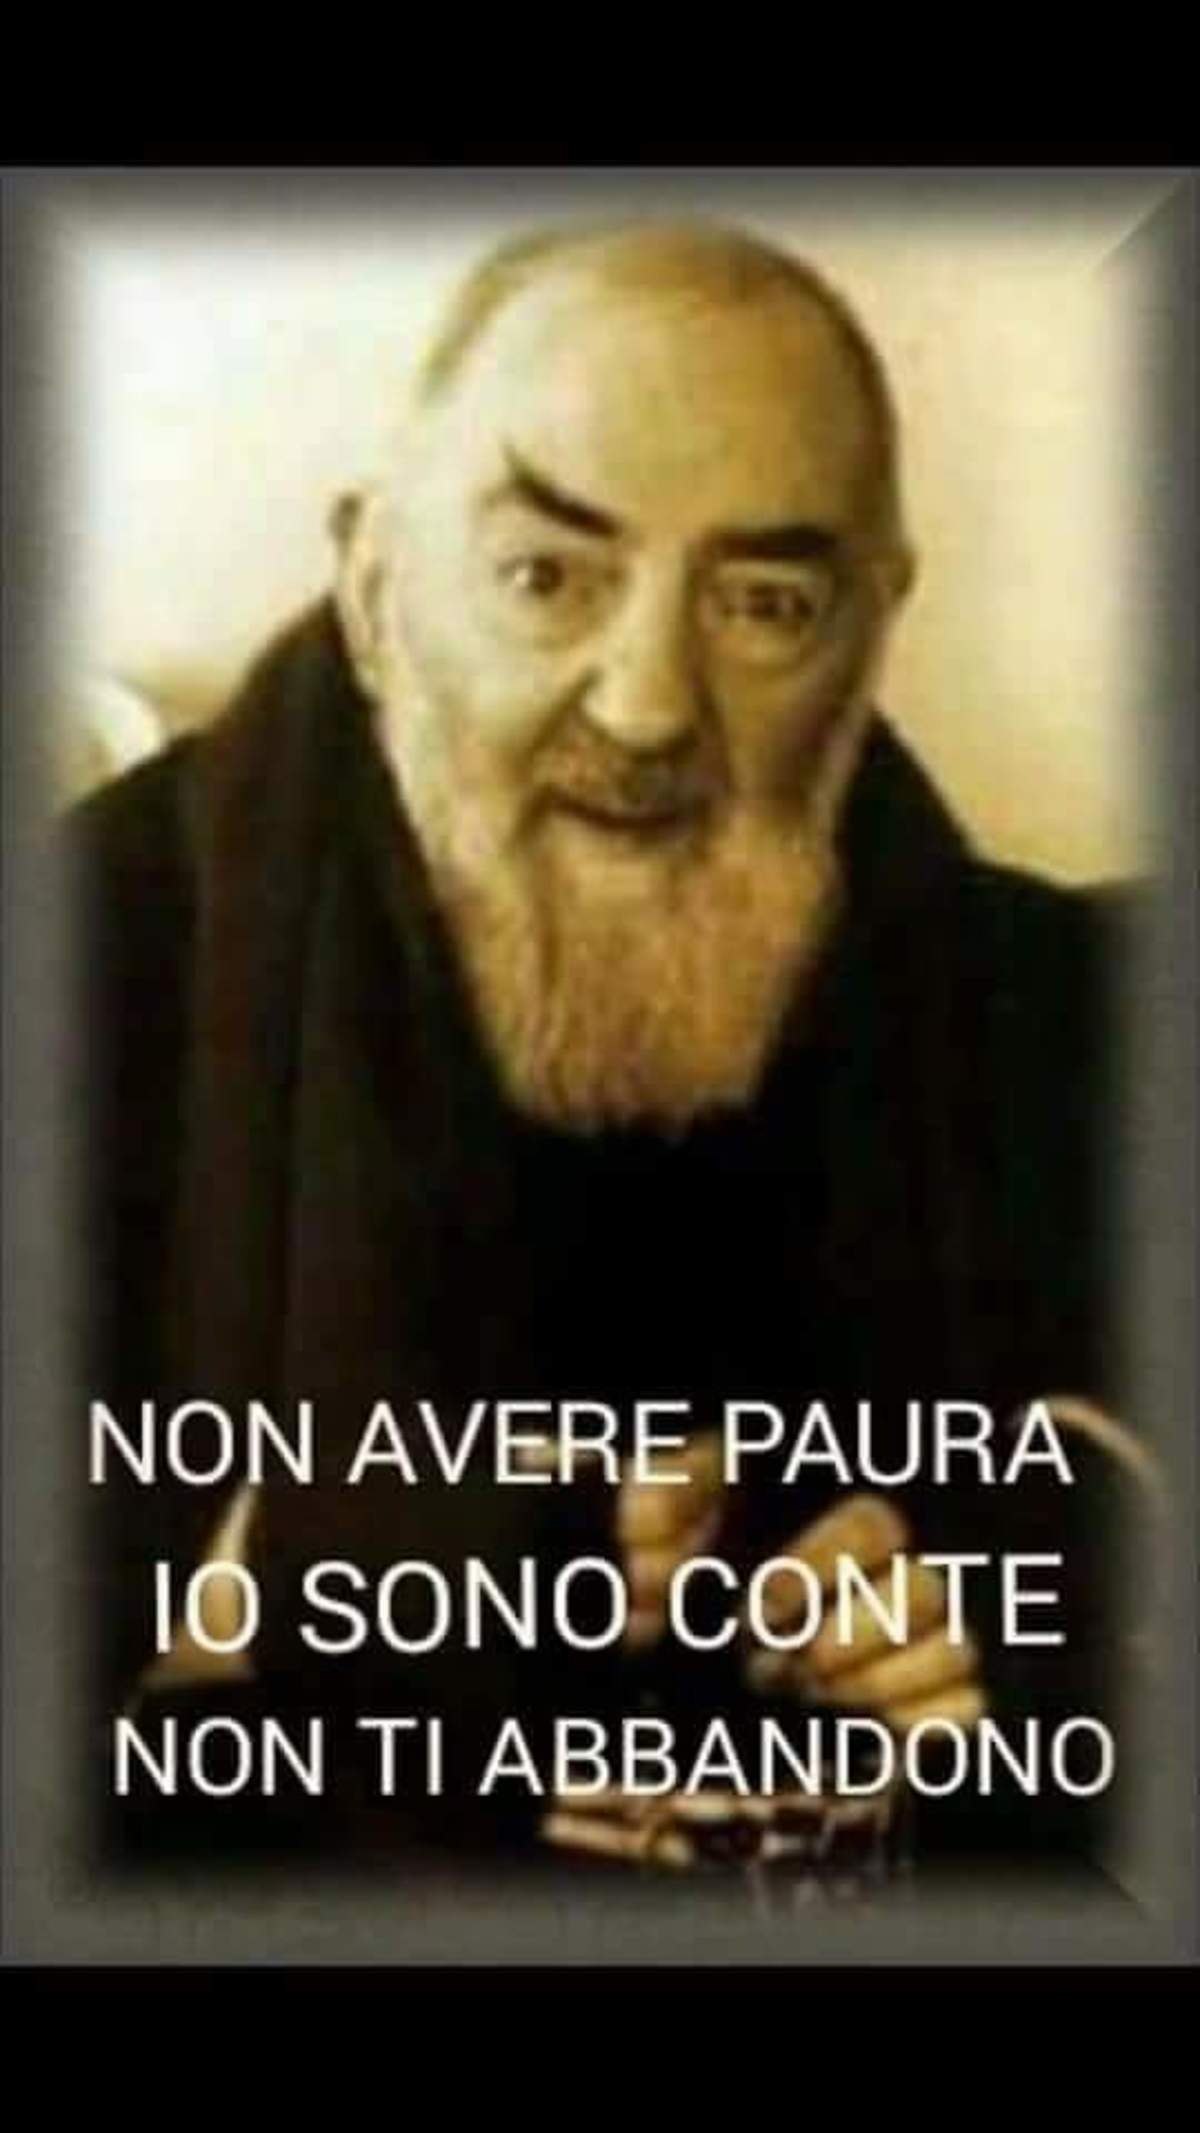 Padre Pio immagini sacre 6260